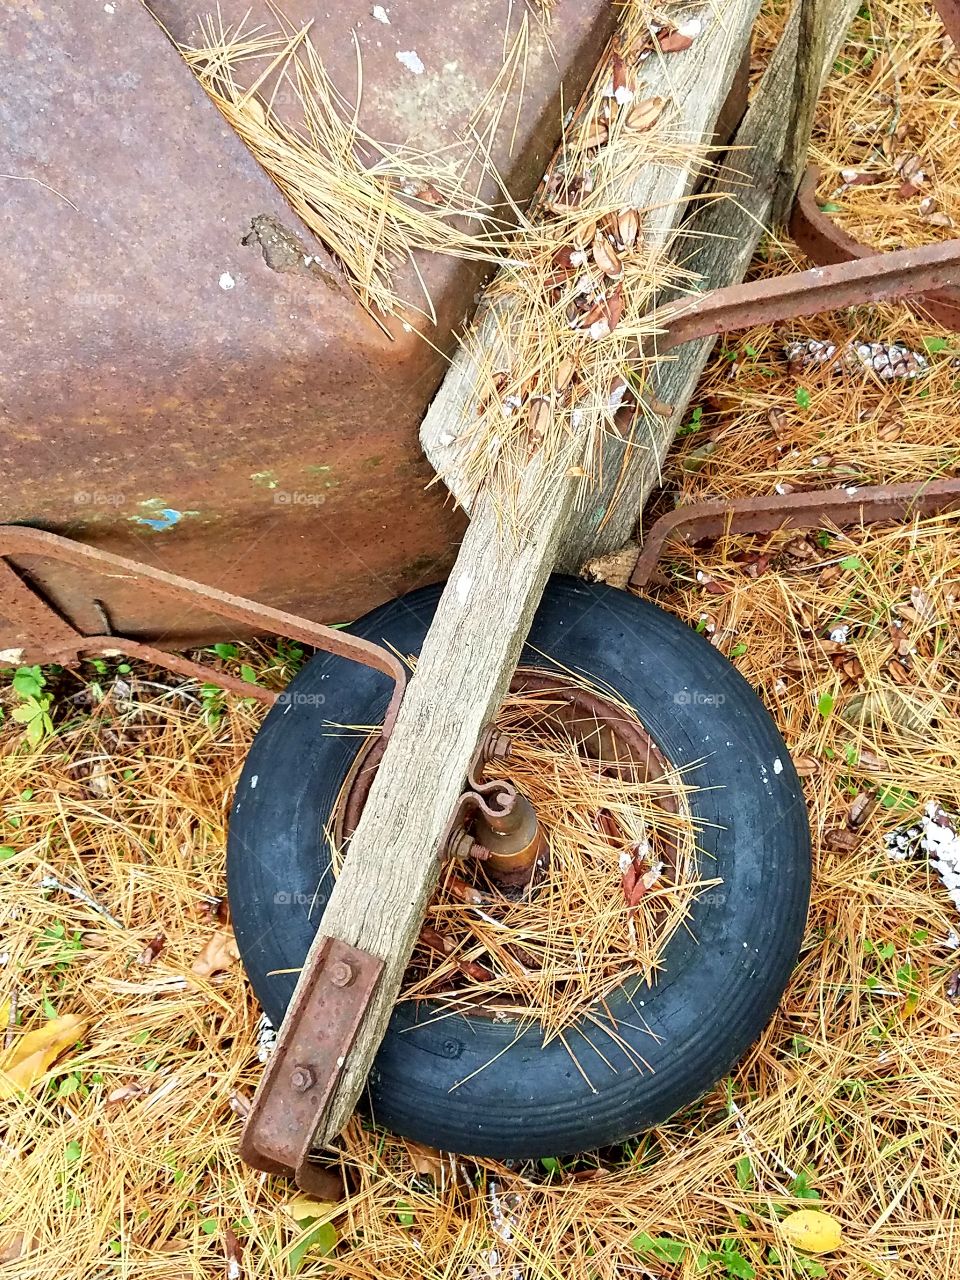 Front end of old rusty wheelbarrow, handmade.